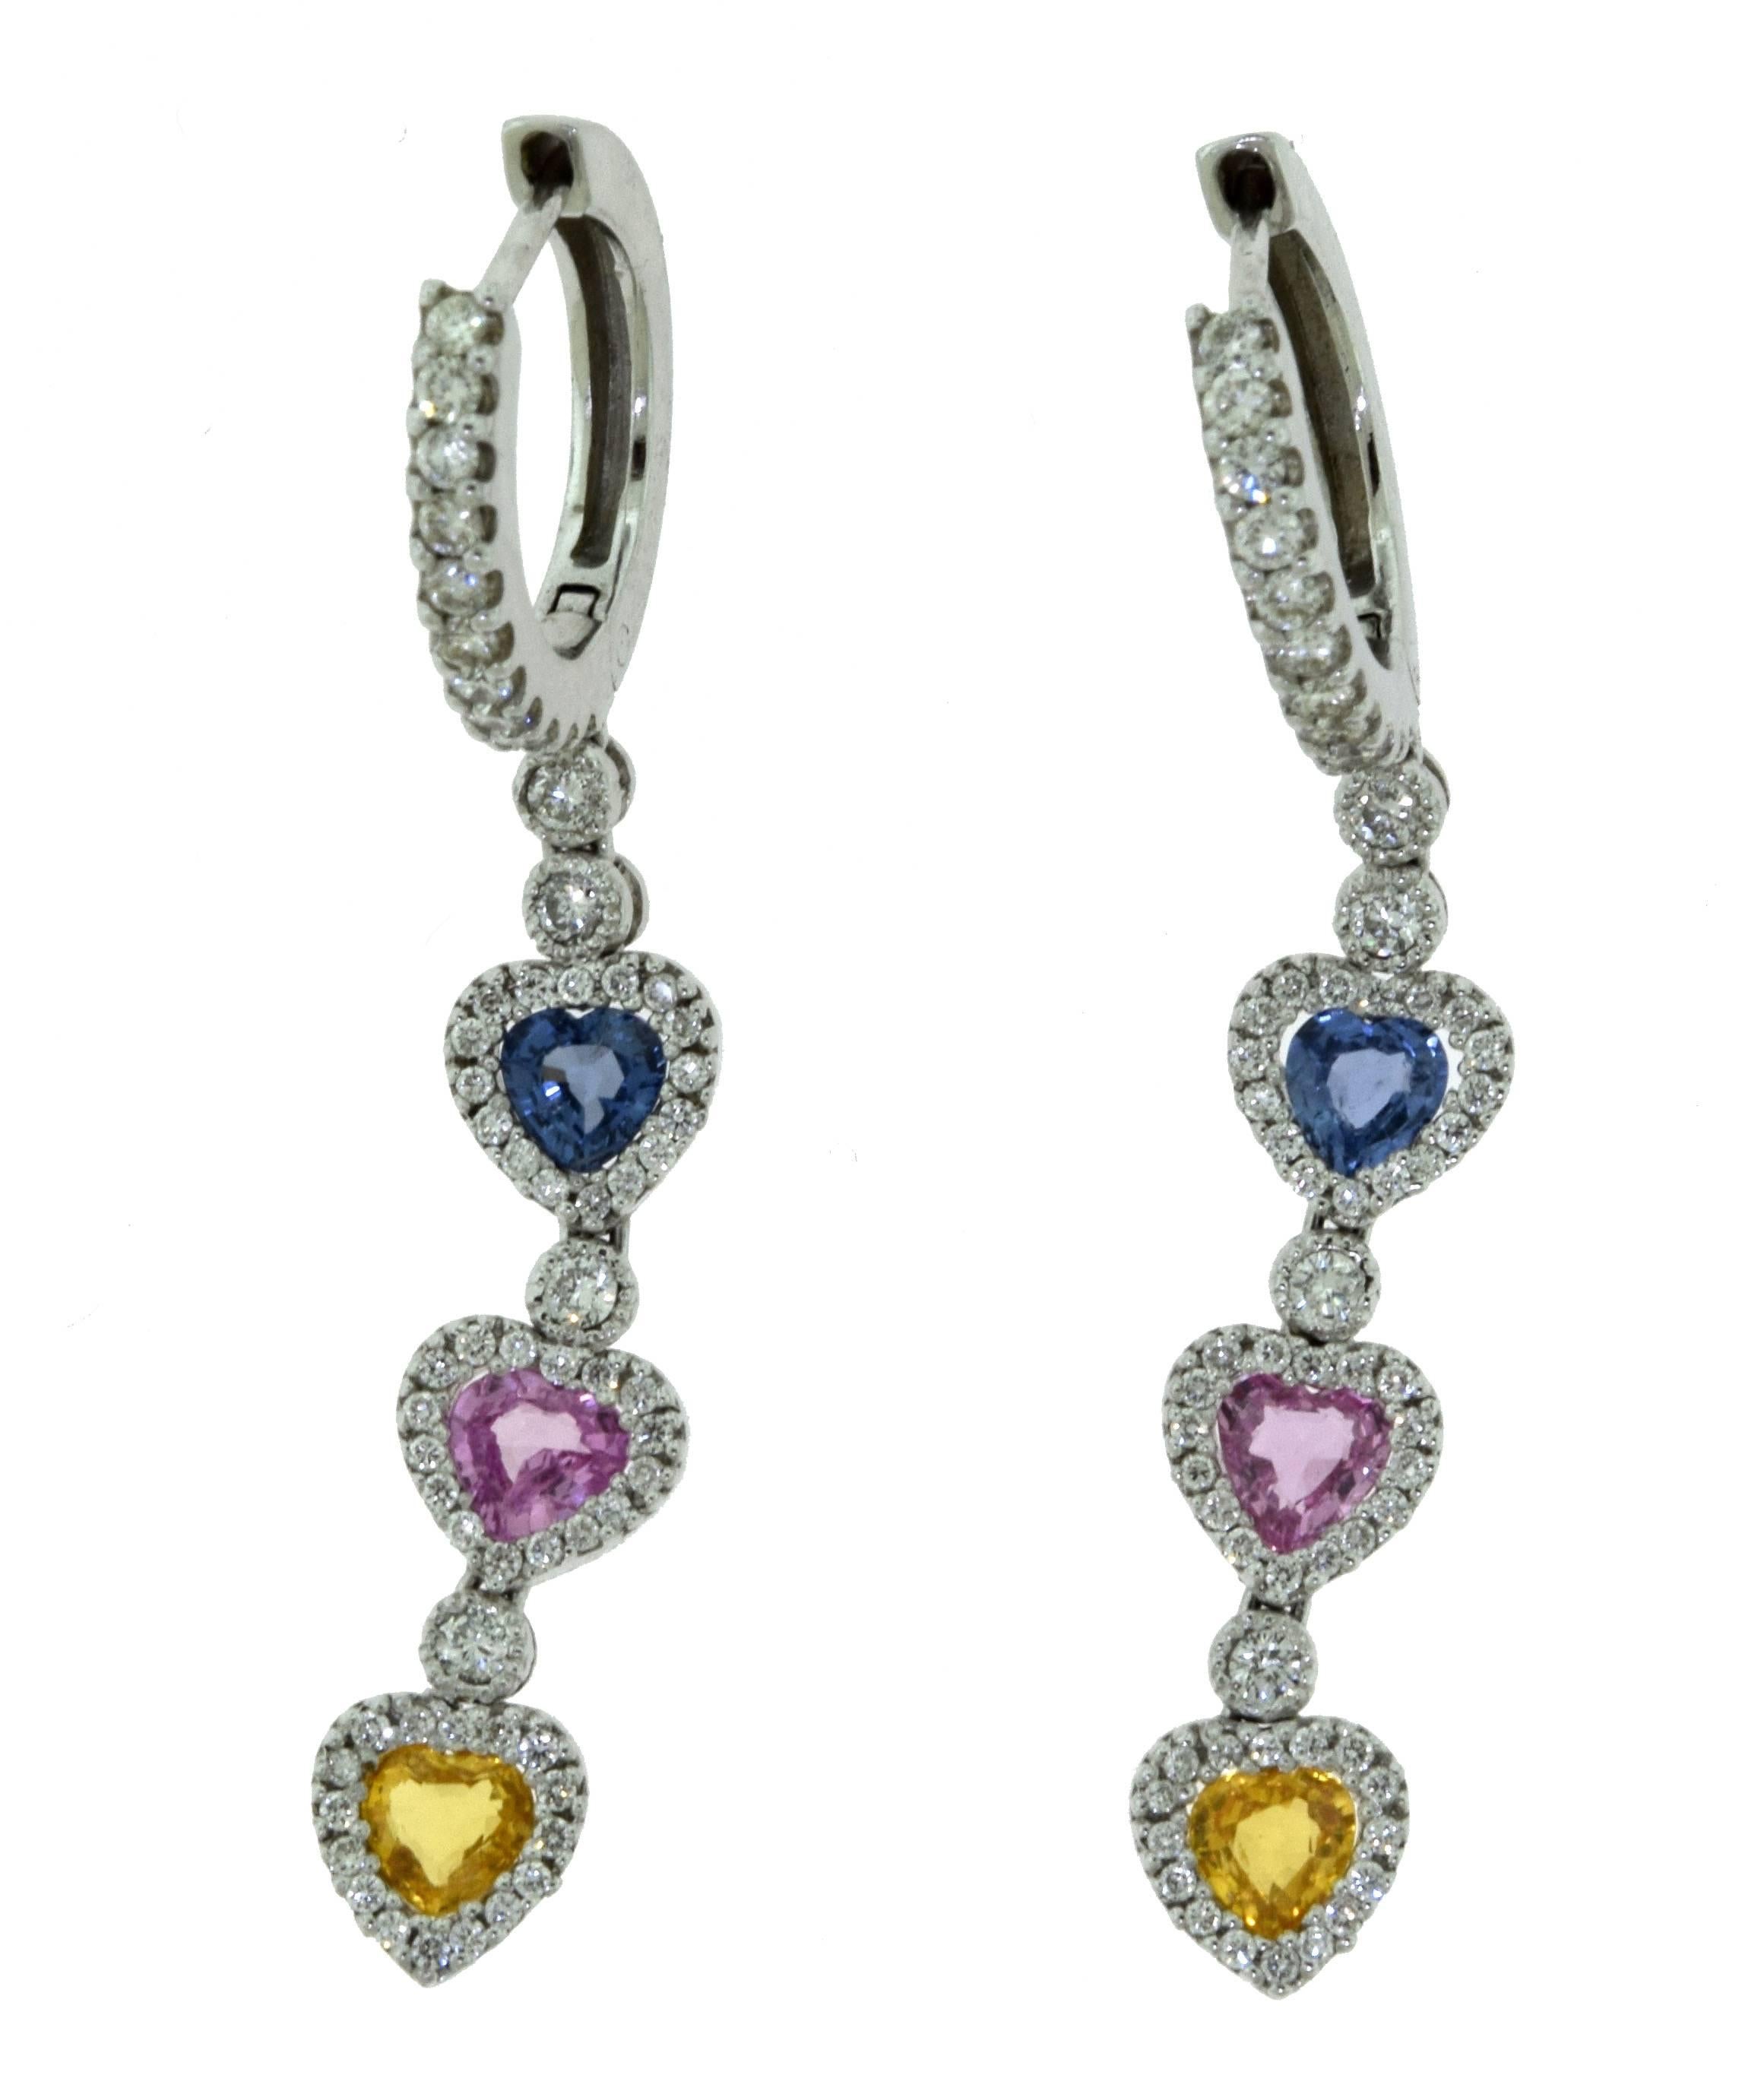 Multi-Color Heart-Shaped Sapphire & Diamond Necklace
Metal: 18k White Gold
Stones: Multi Color Sapphires, Diamonds
Total Carat Weight: 12.1 carat

BRACELET:
Bracelet Length: 7.5 inches
Diamond Carat Weight: 2.30 carat
Sapphire Carat Weight: 1.80